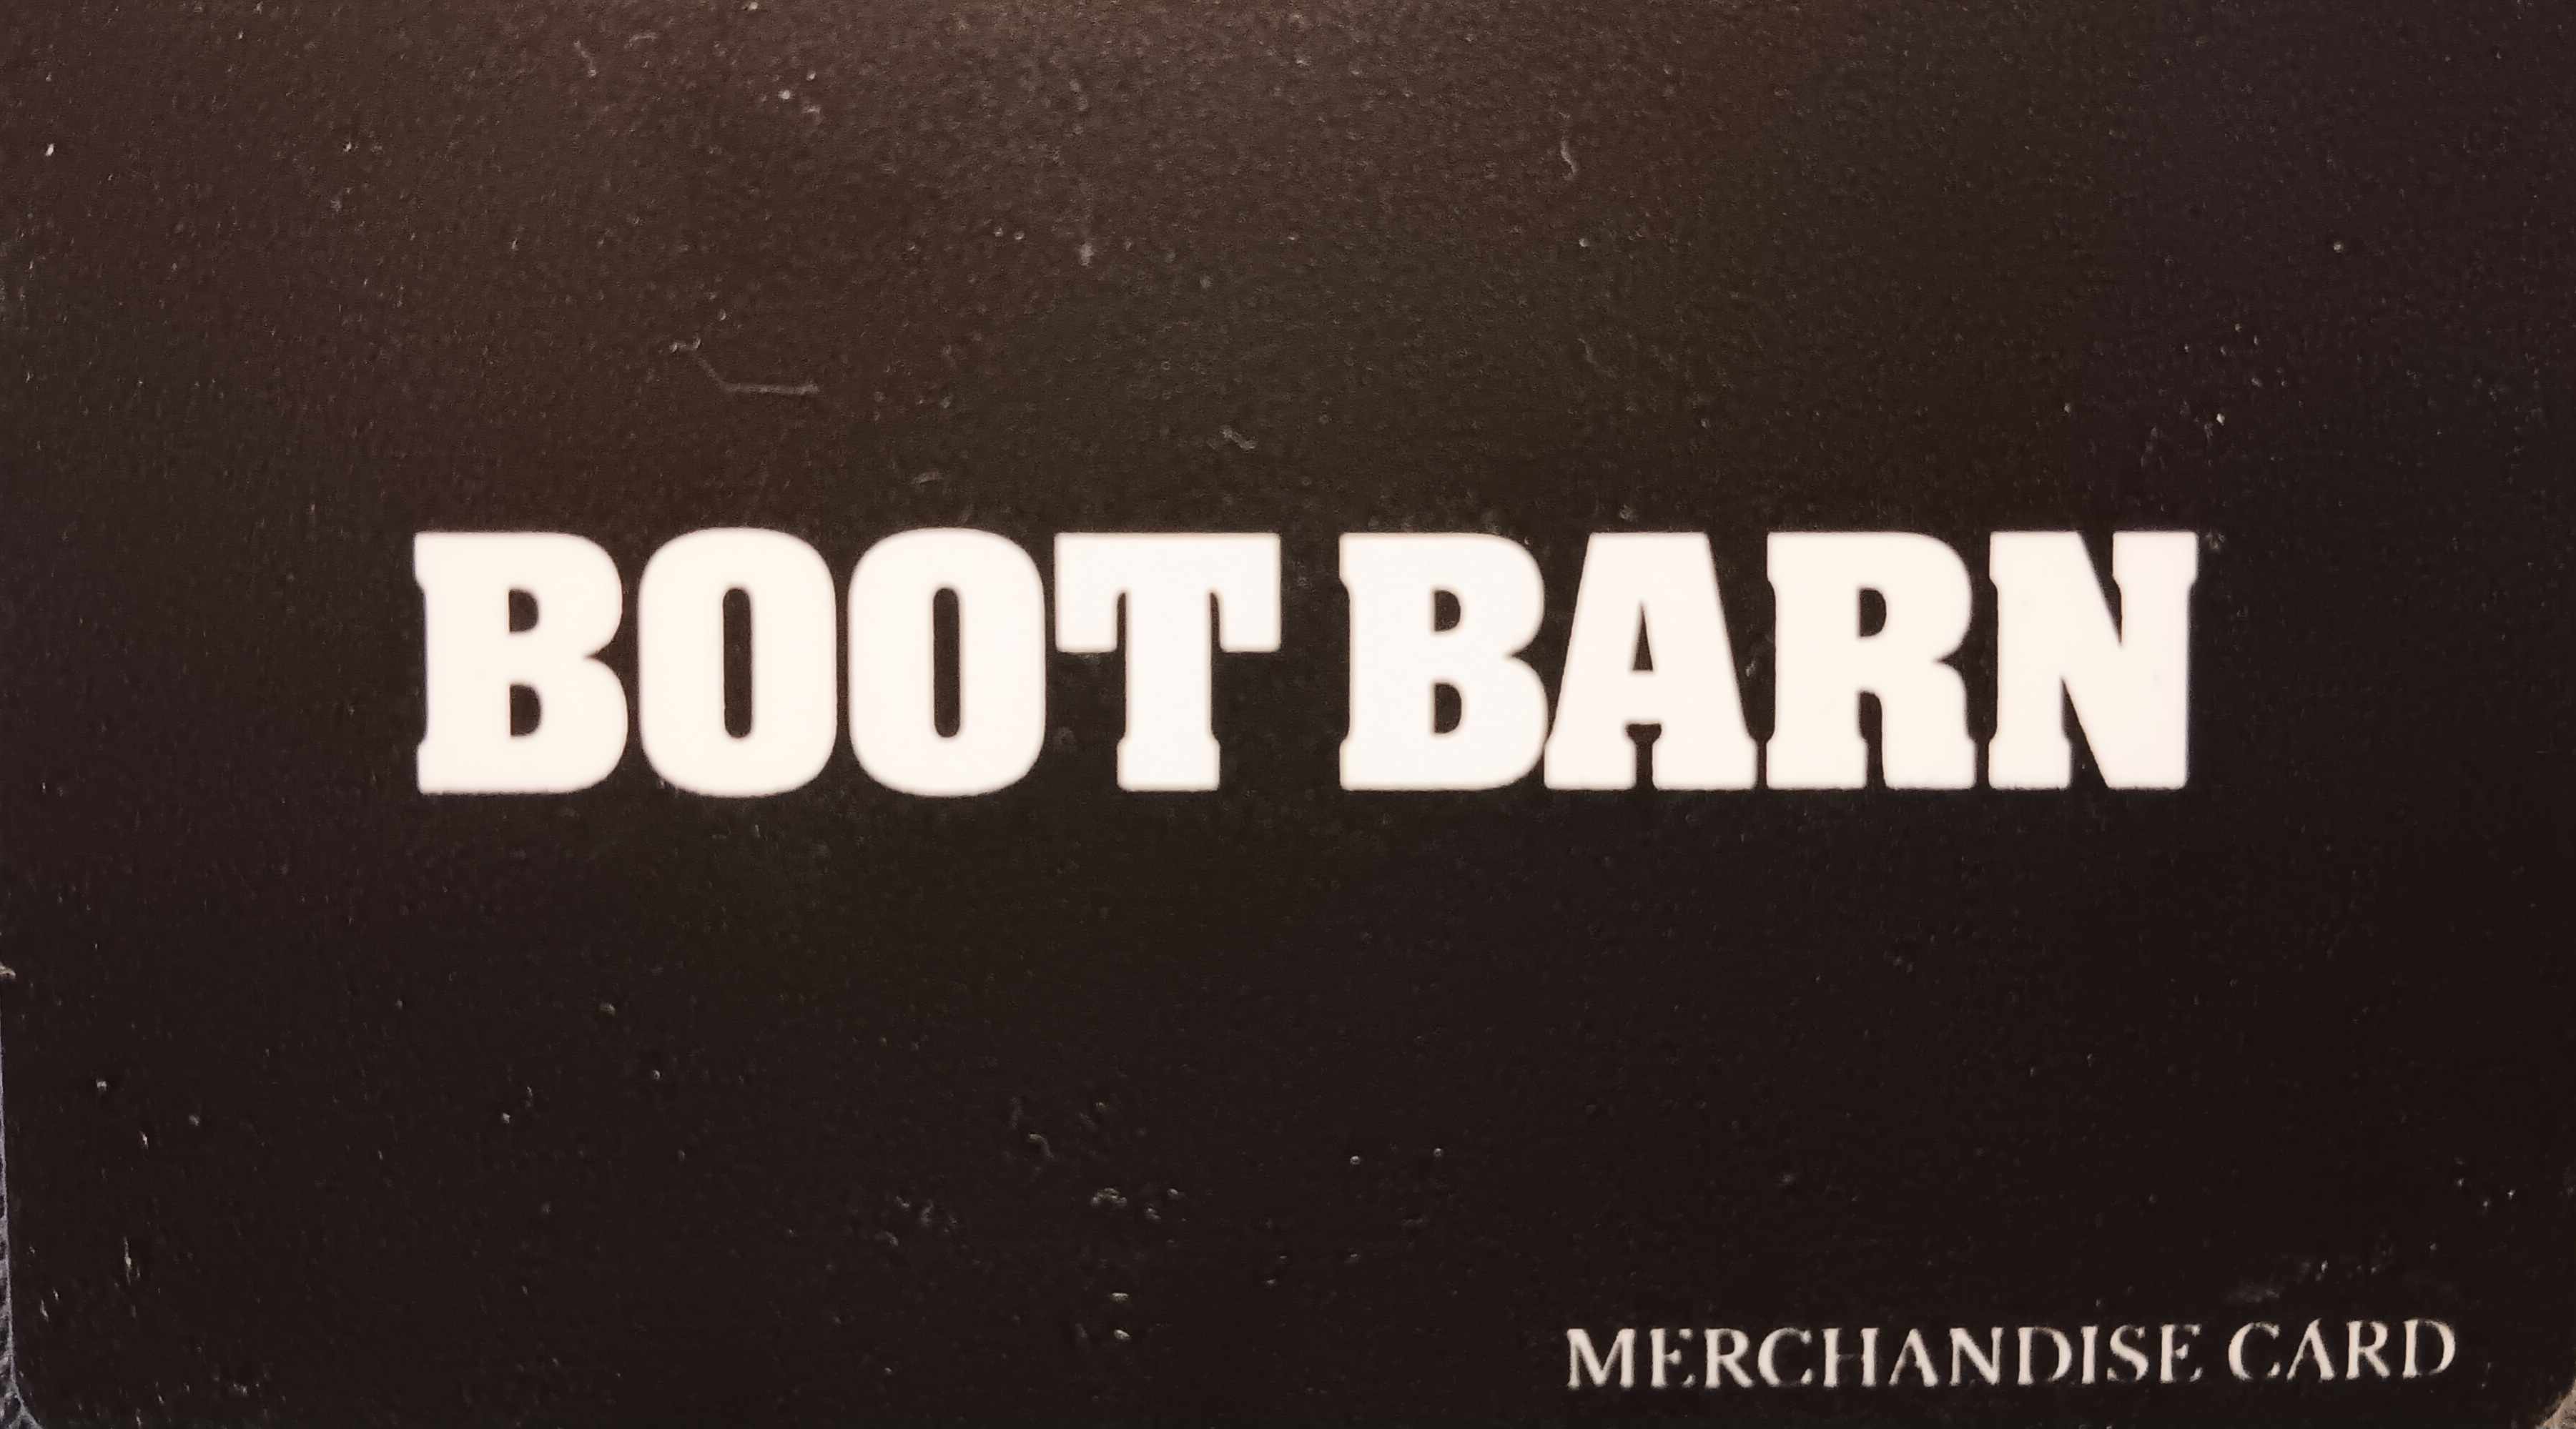 Boot Barn Reviews - 98 Reviews of Bootbarn.com